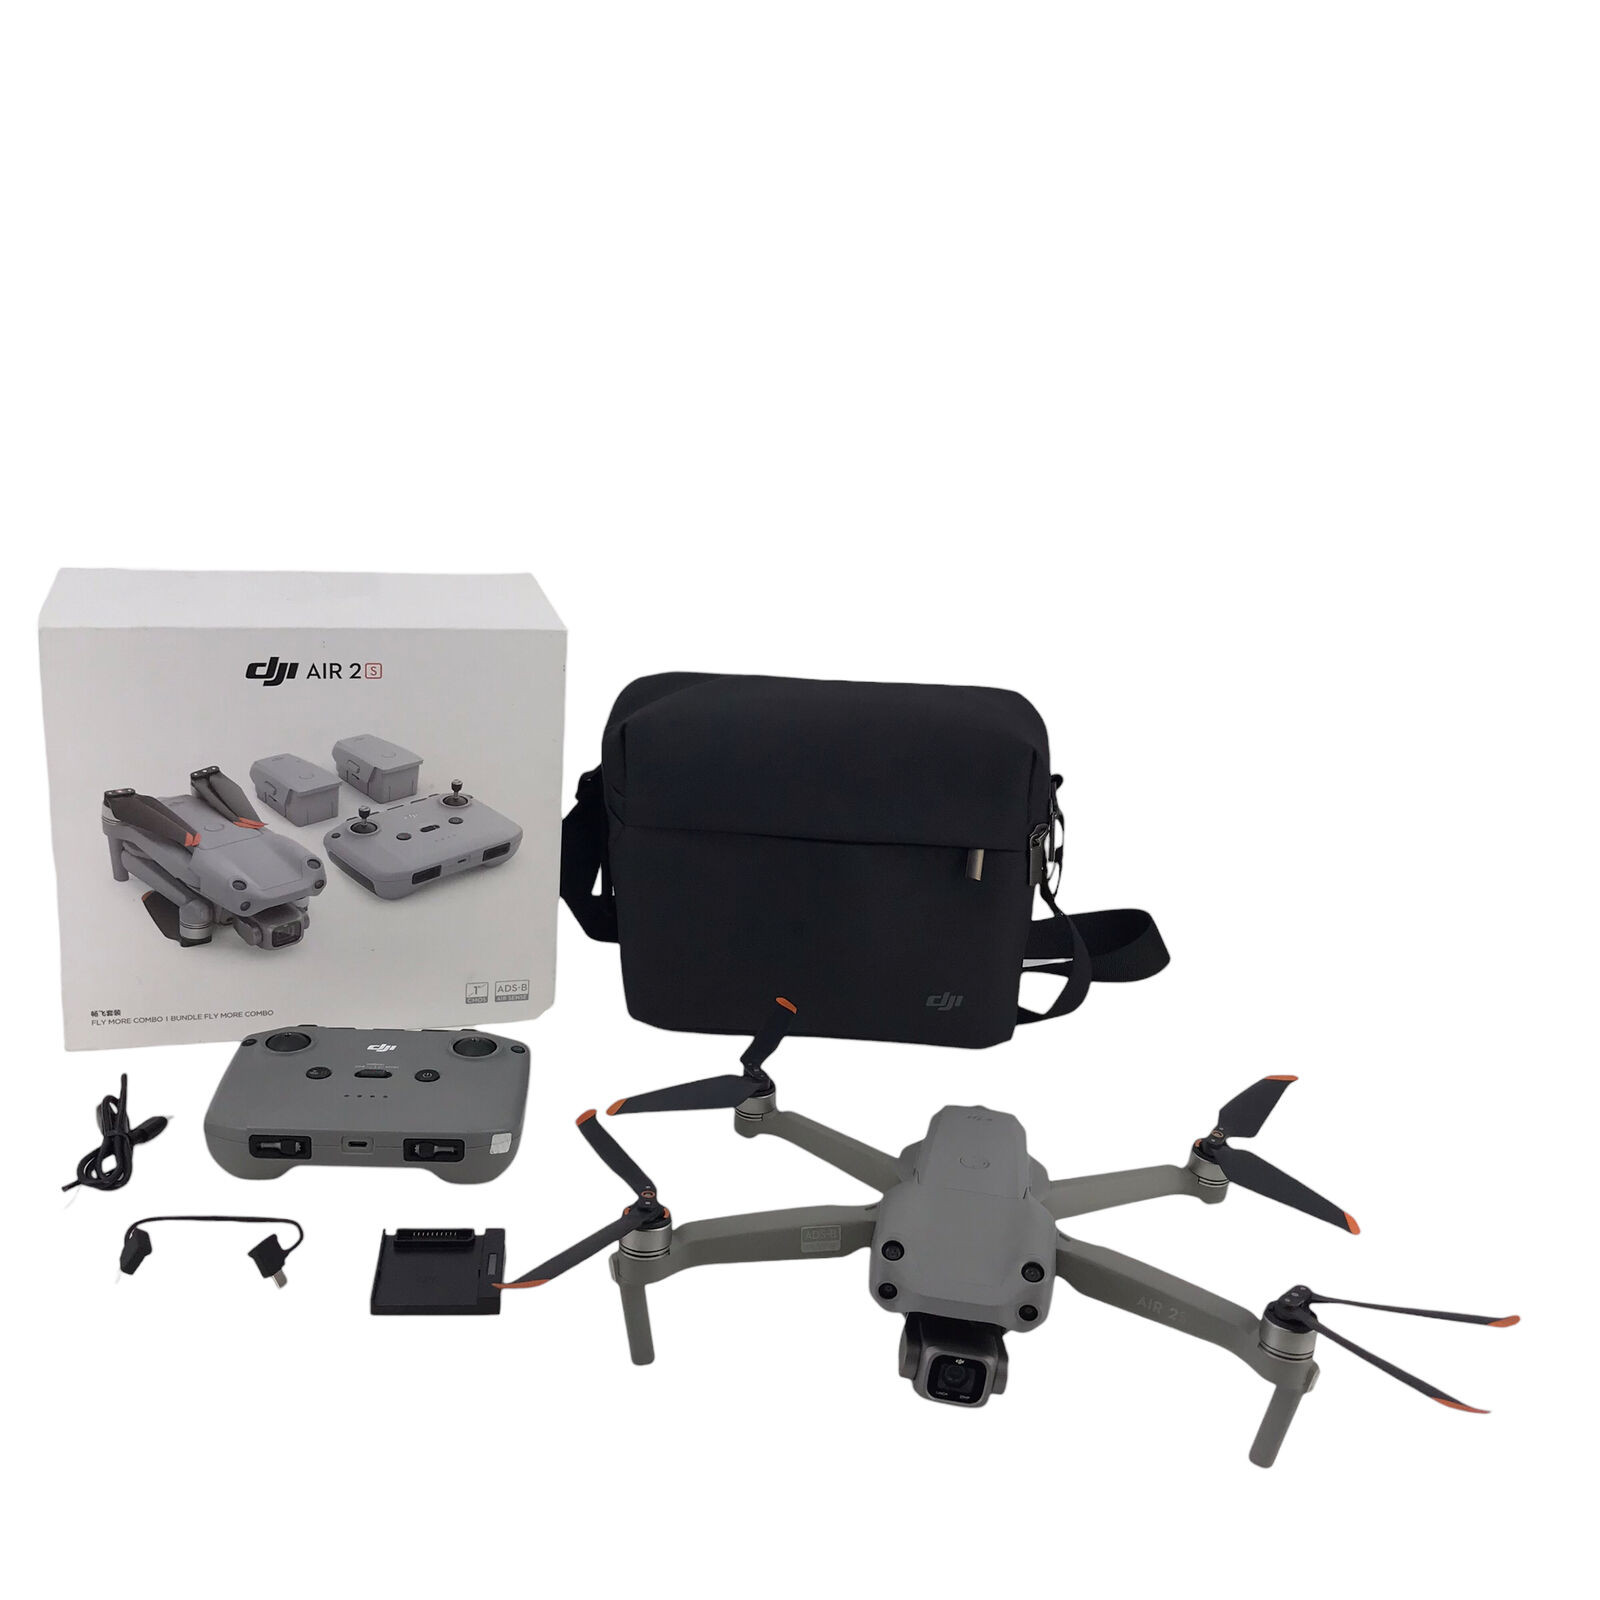 DJI Air 2S Drone w/ Remote RC231 Quadcopter- Gray #UG6581